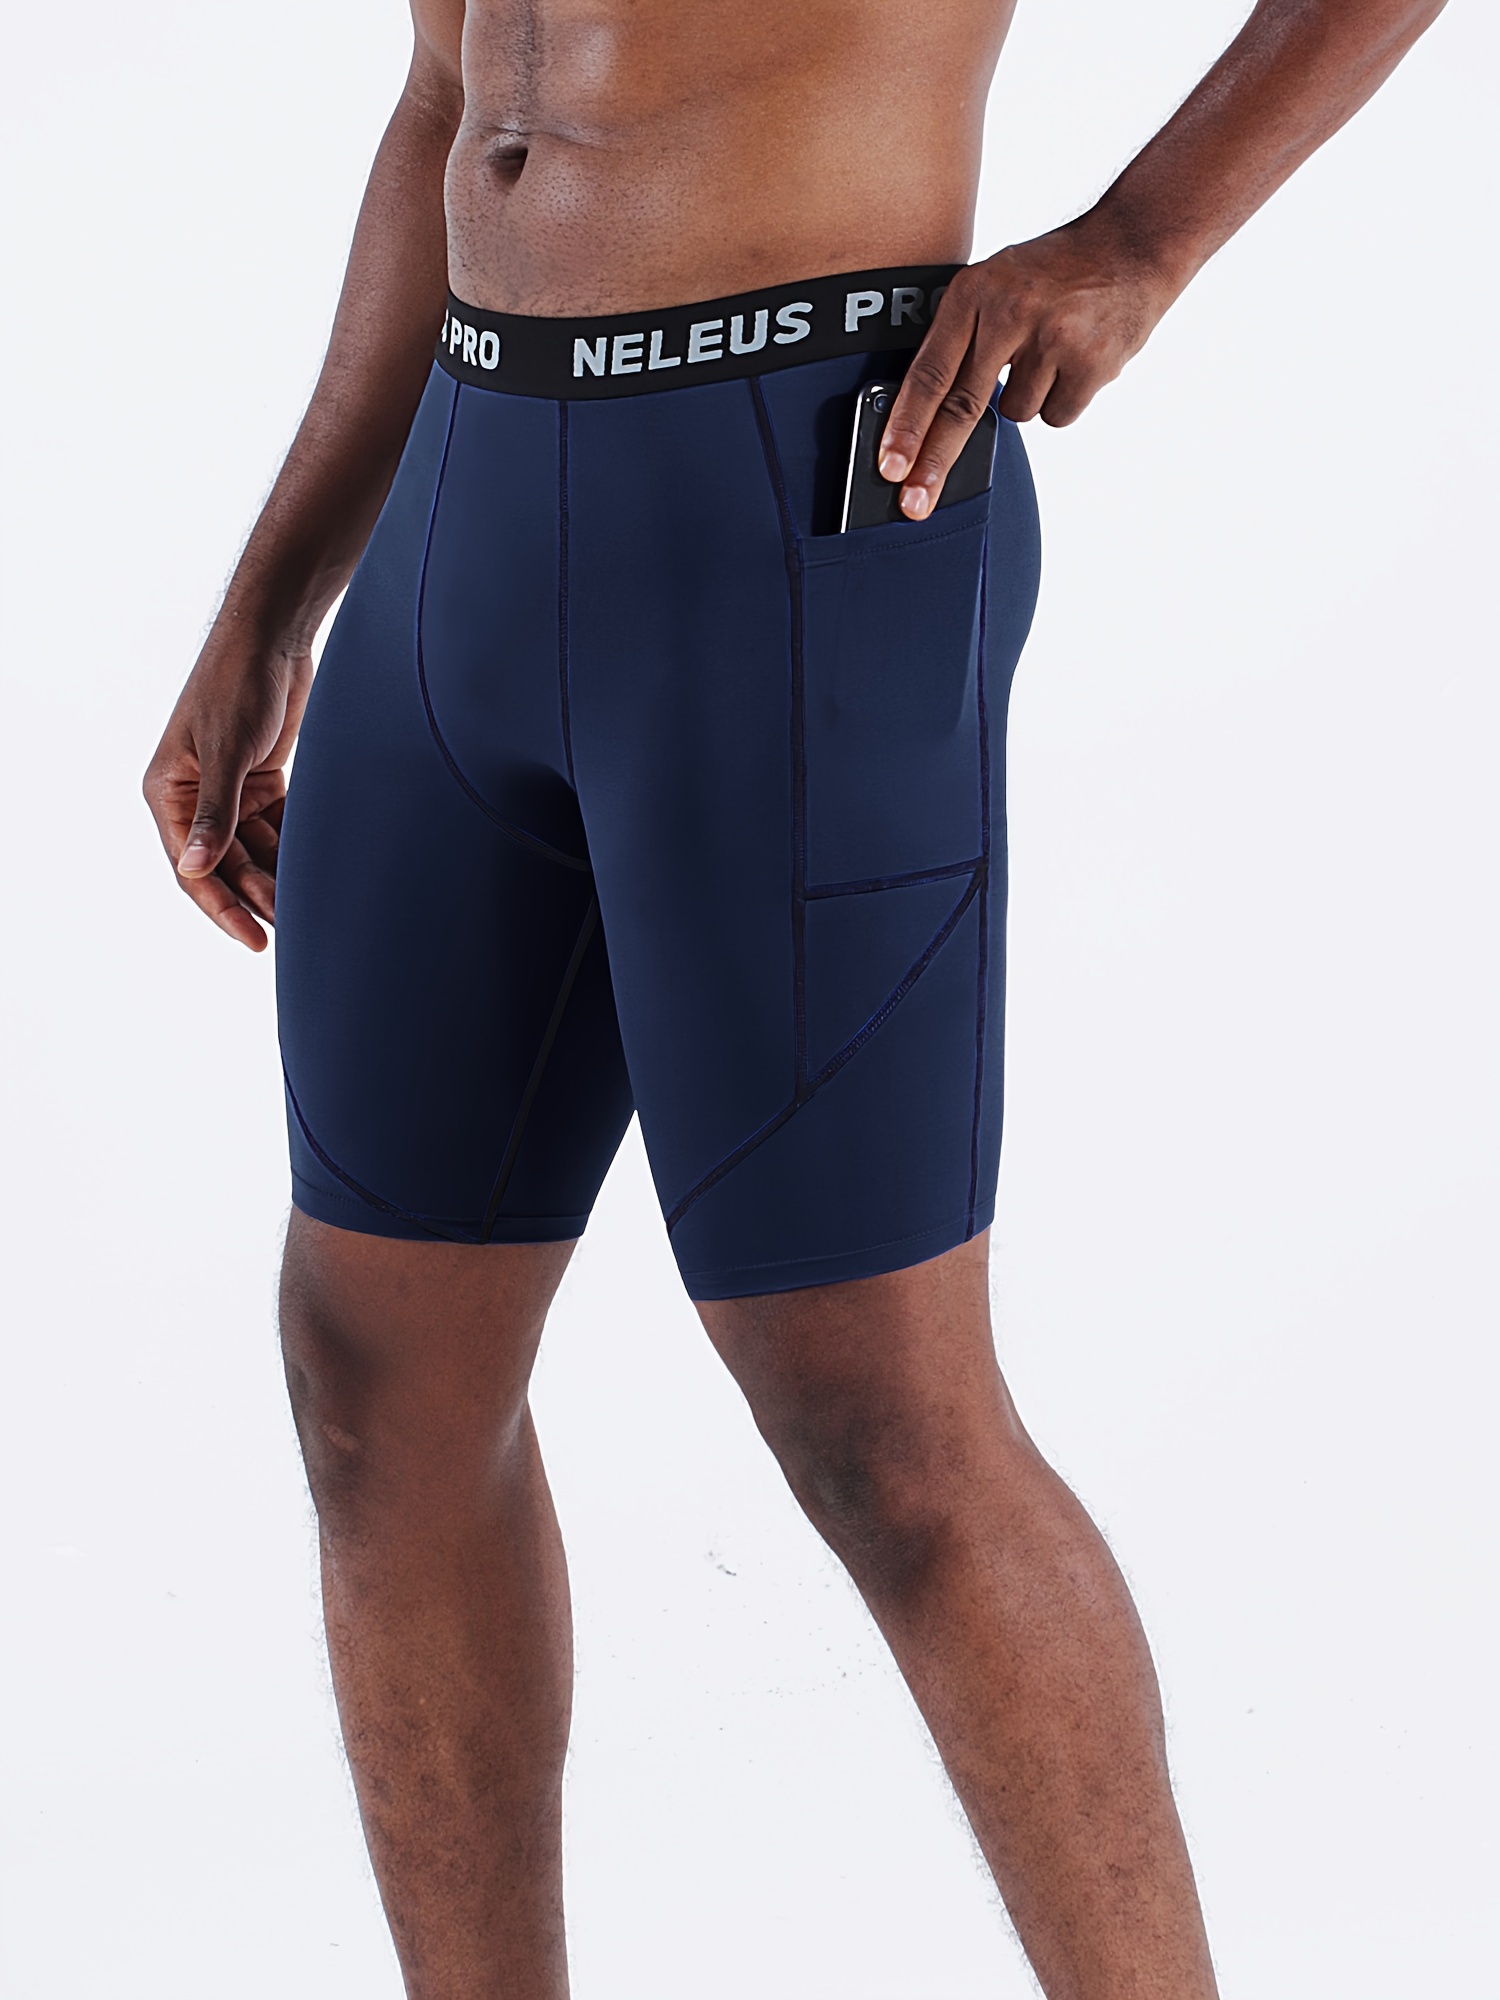 Neleus Men's Compression Short with Pocket Dry Fit Yoga Shorts